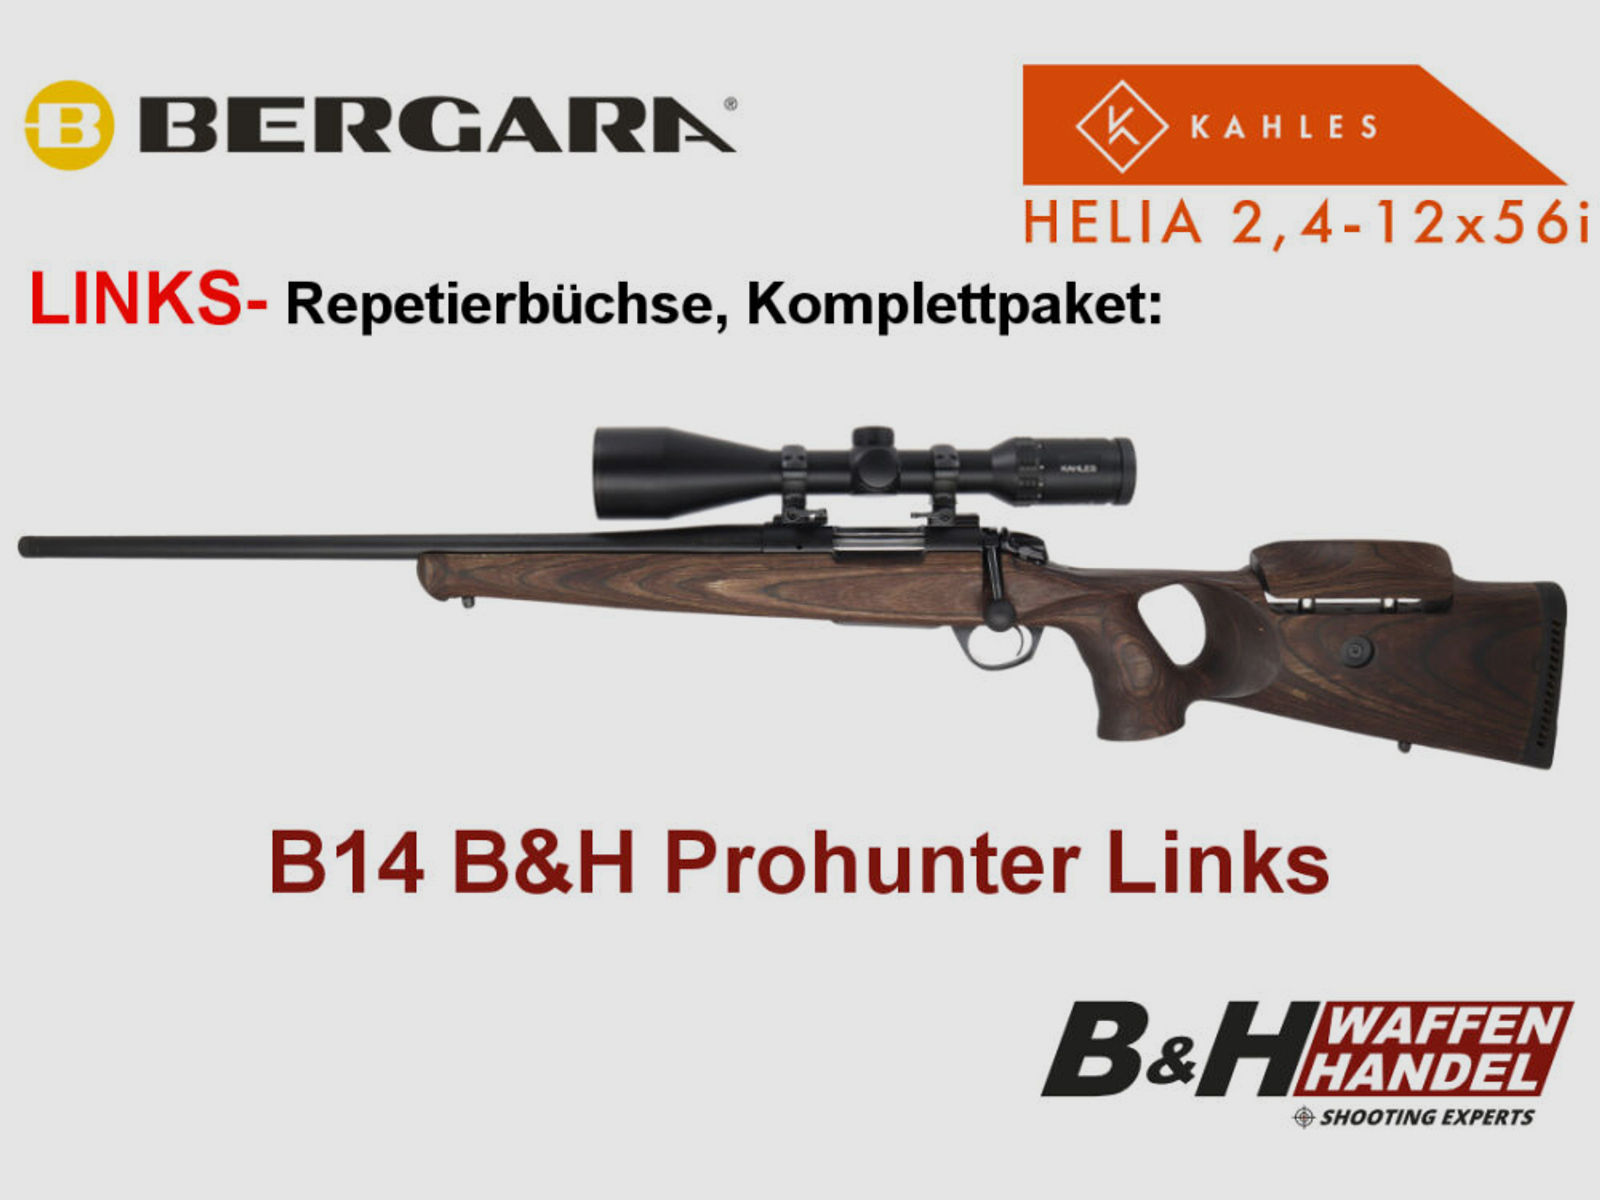 Bergara	 B14 B&H Prohunter LINKS Lochschaft mit Kahles Helia 2.4-12x56 fertig montiert / Optional: Brenner Schalldämpfer